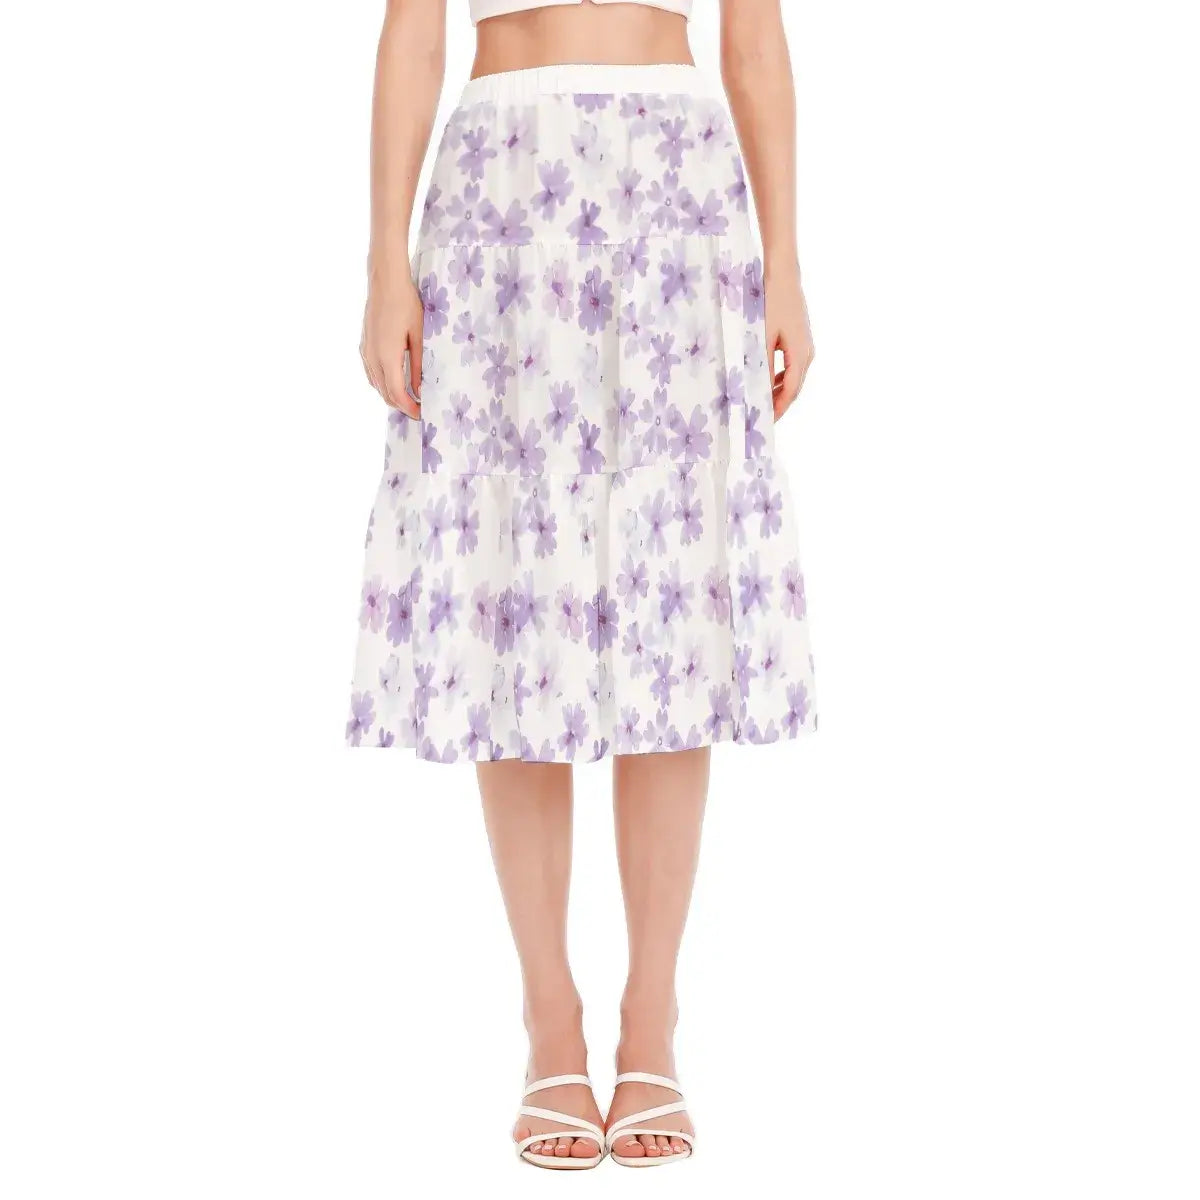 Archiify Cottagecore Women's Floral Print Stitched Pleated Chiffon Skirt